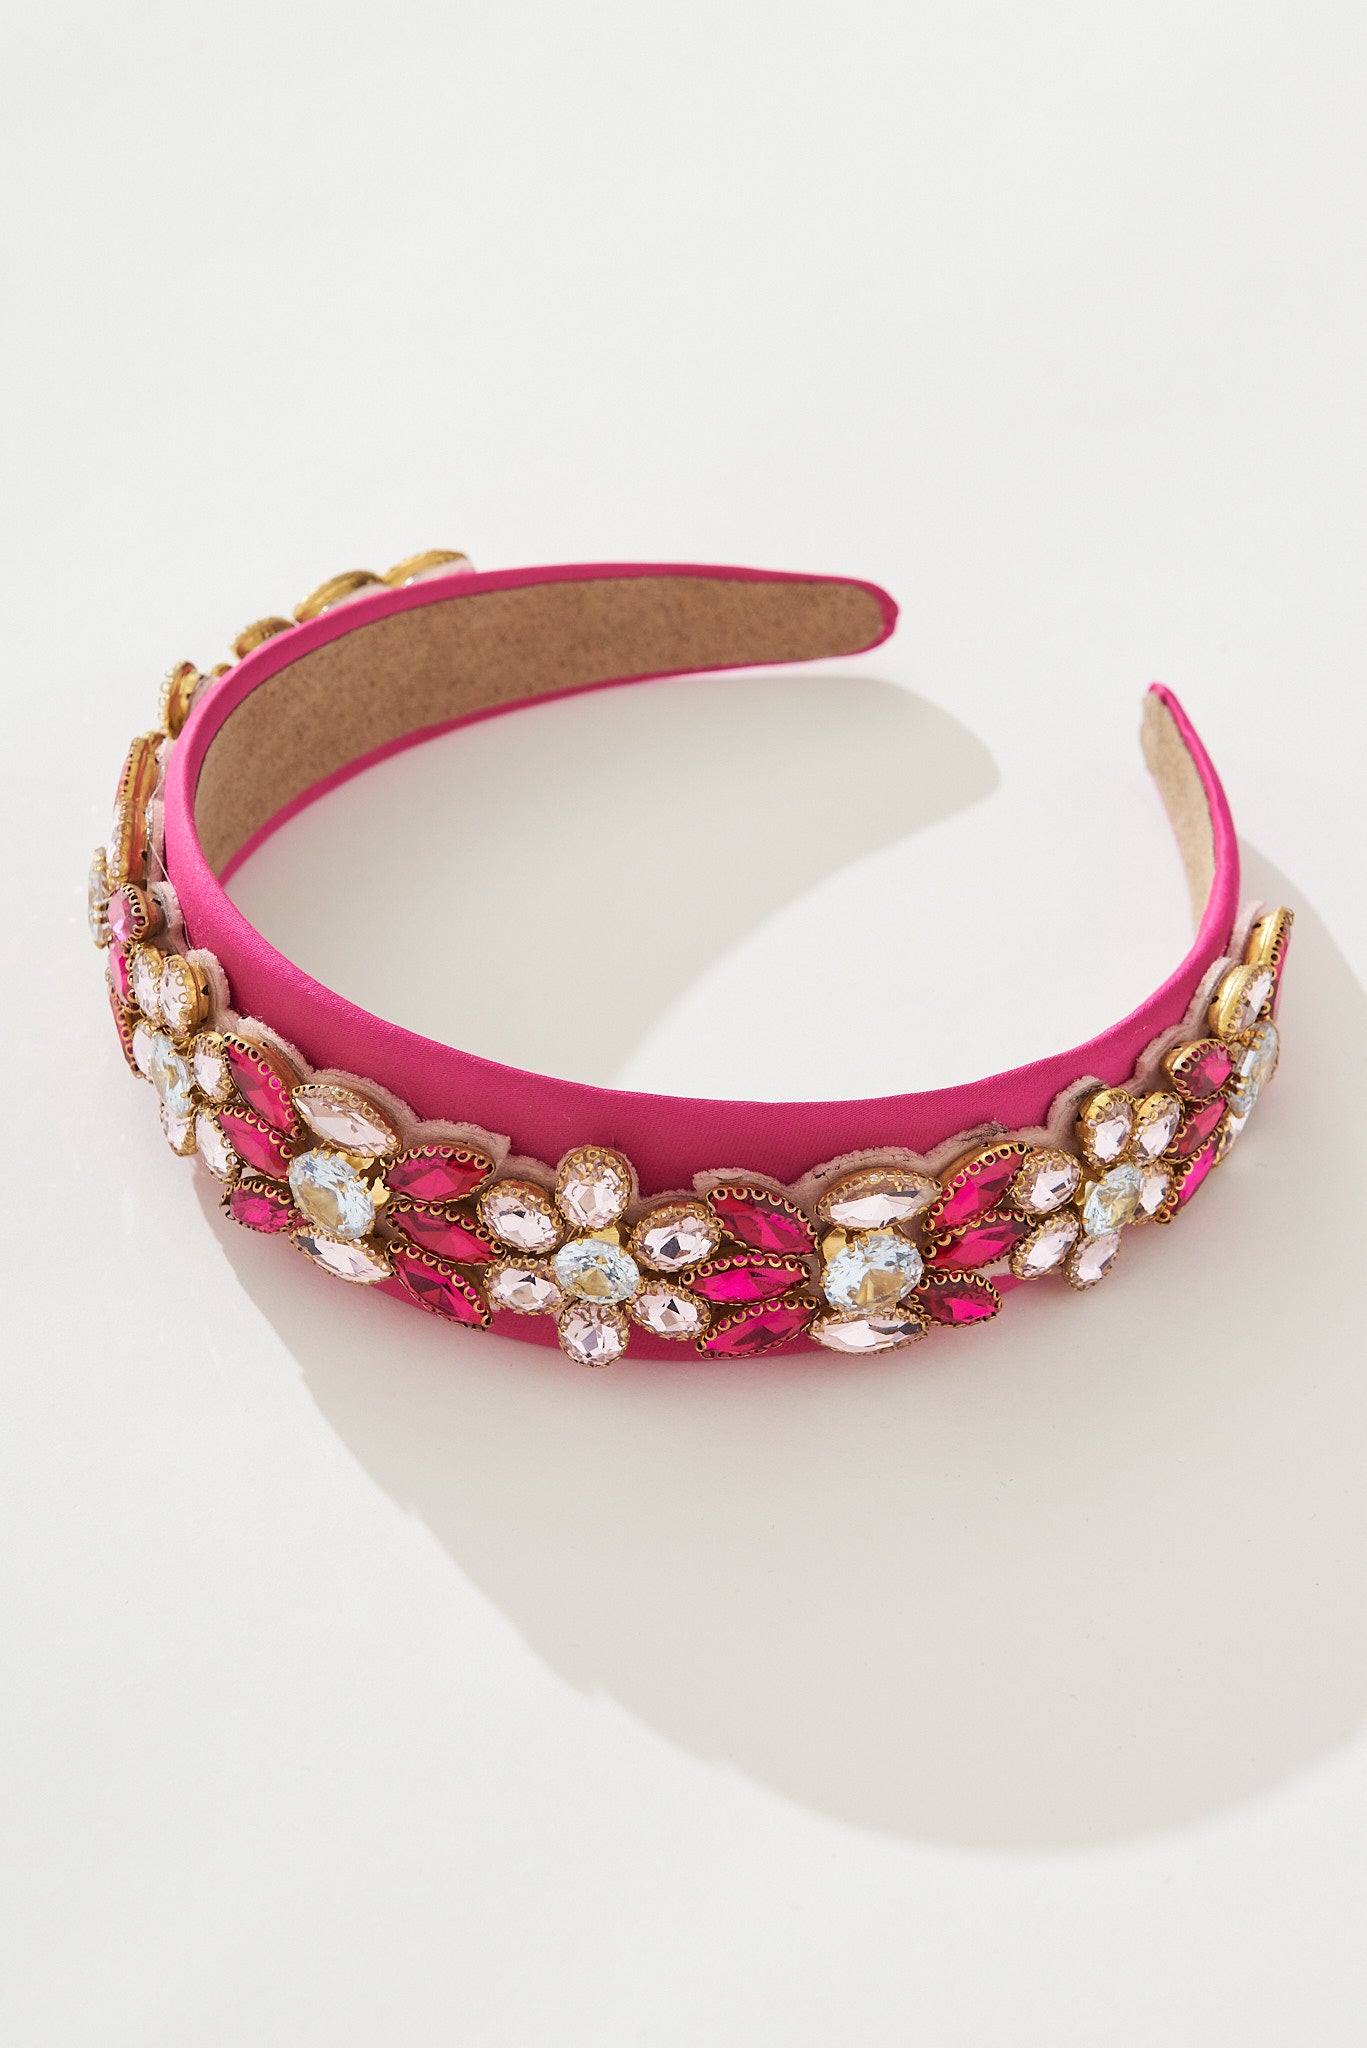 August + Delilah Eloise Headband In Hot Pink Diamante - detail